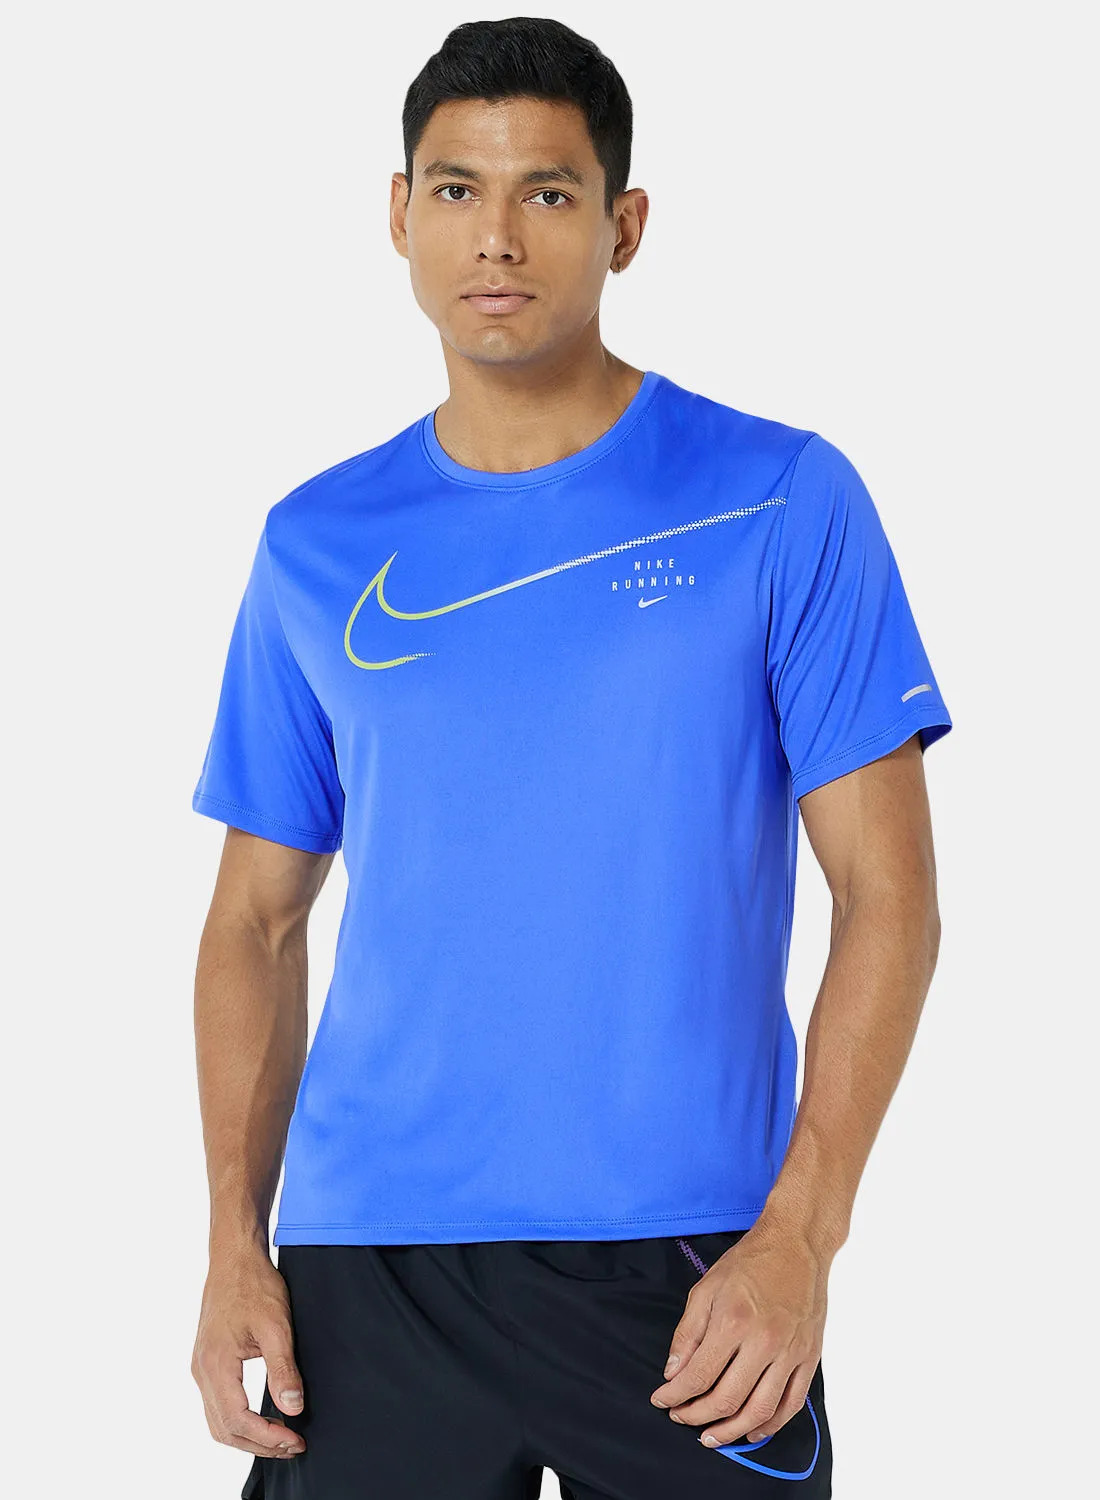 Nike Dri-FIT UV Run Division Miler Graphics Running T-Shirt